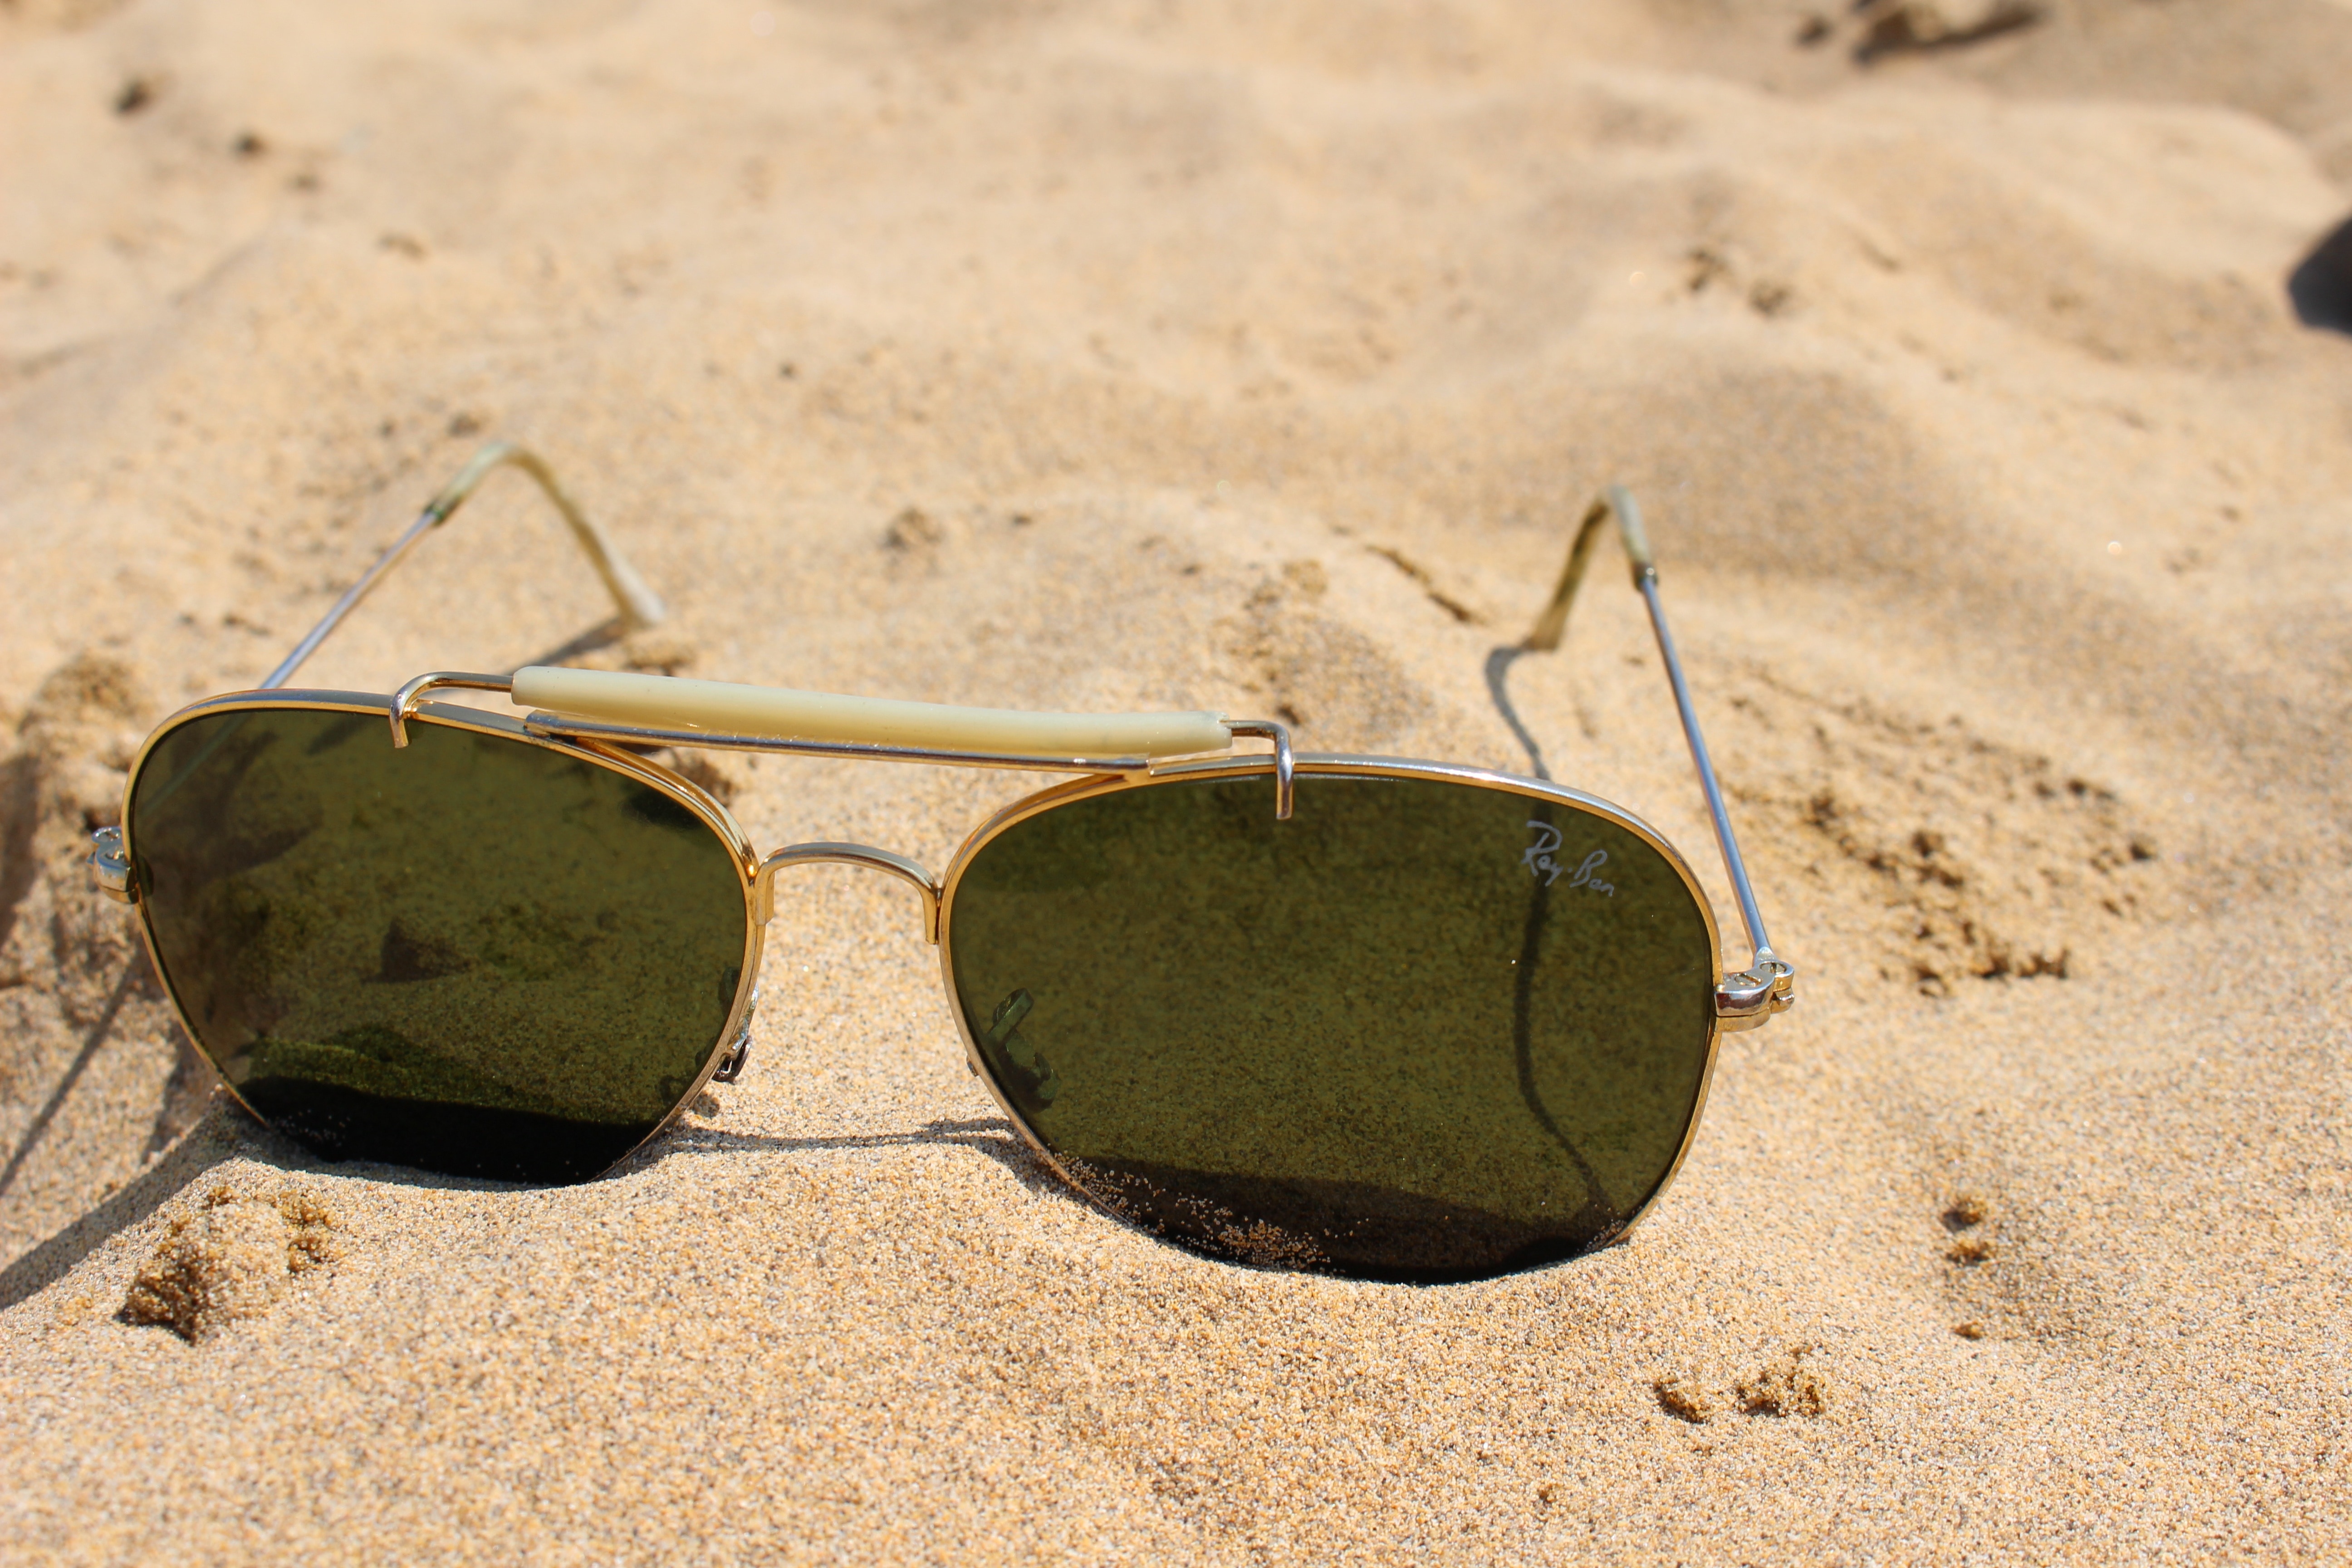 Sunglasses, Glasses, Beach, Sand, Summer, sunglasses, sand